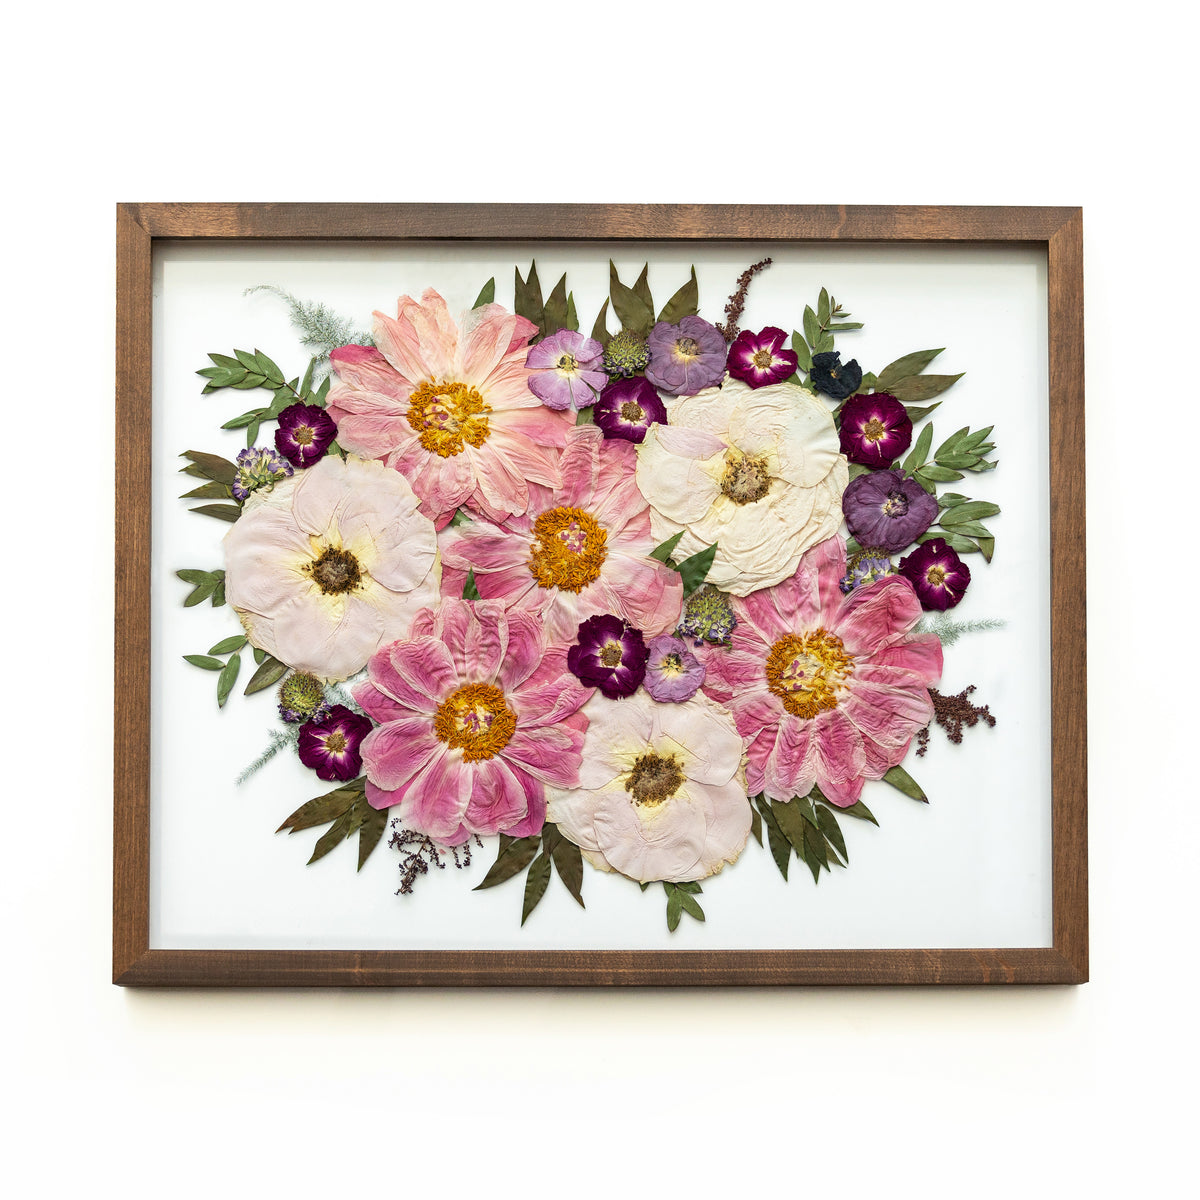 Professional floral preservation service for bridal bouquet | 16x20